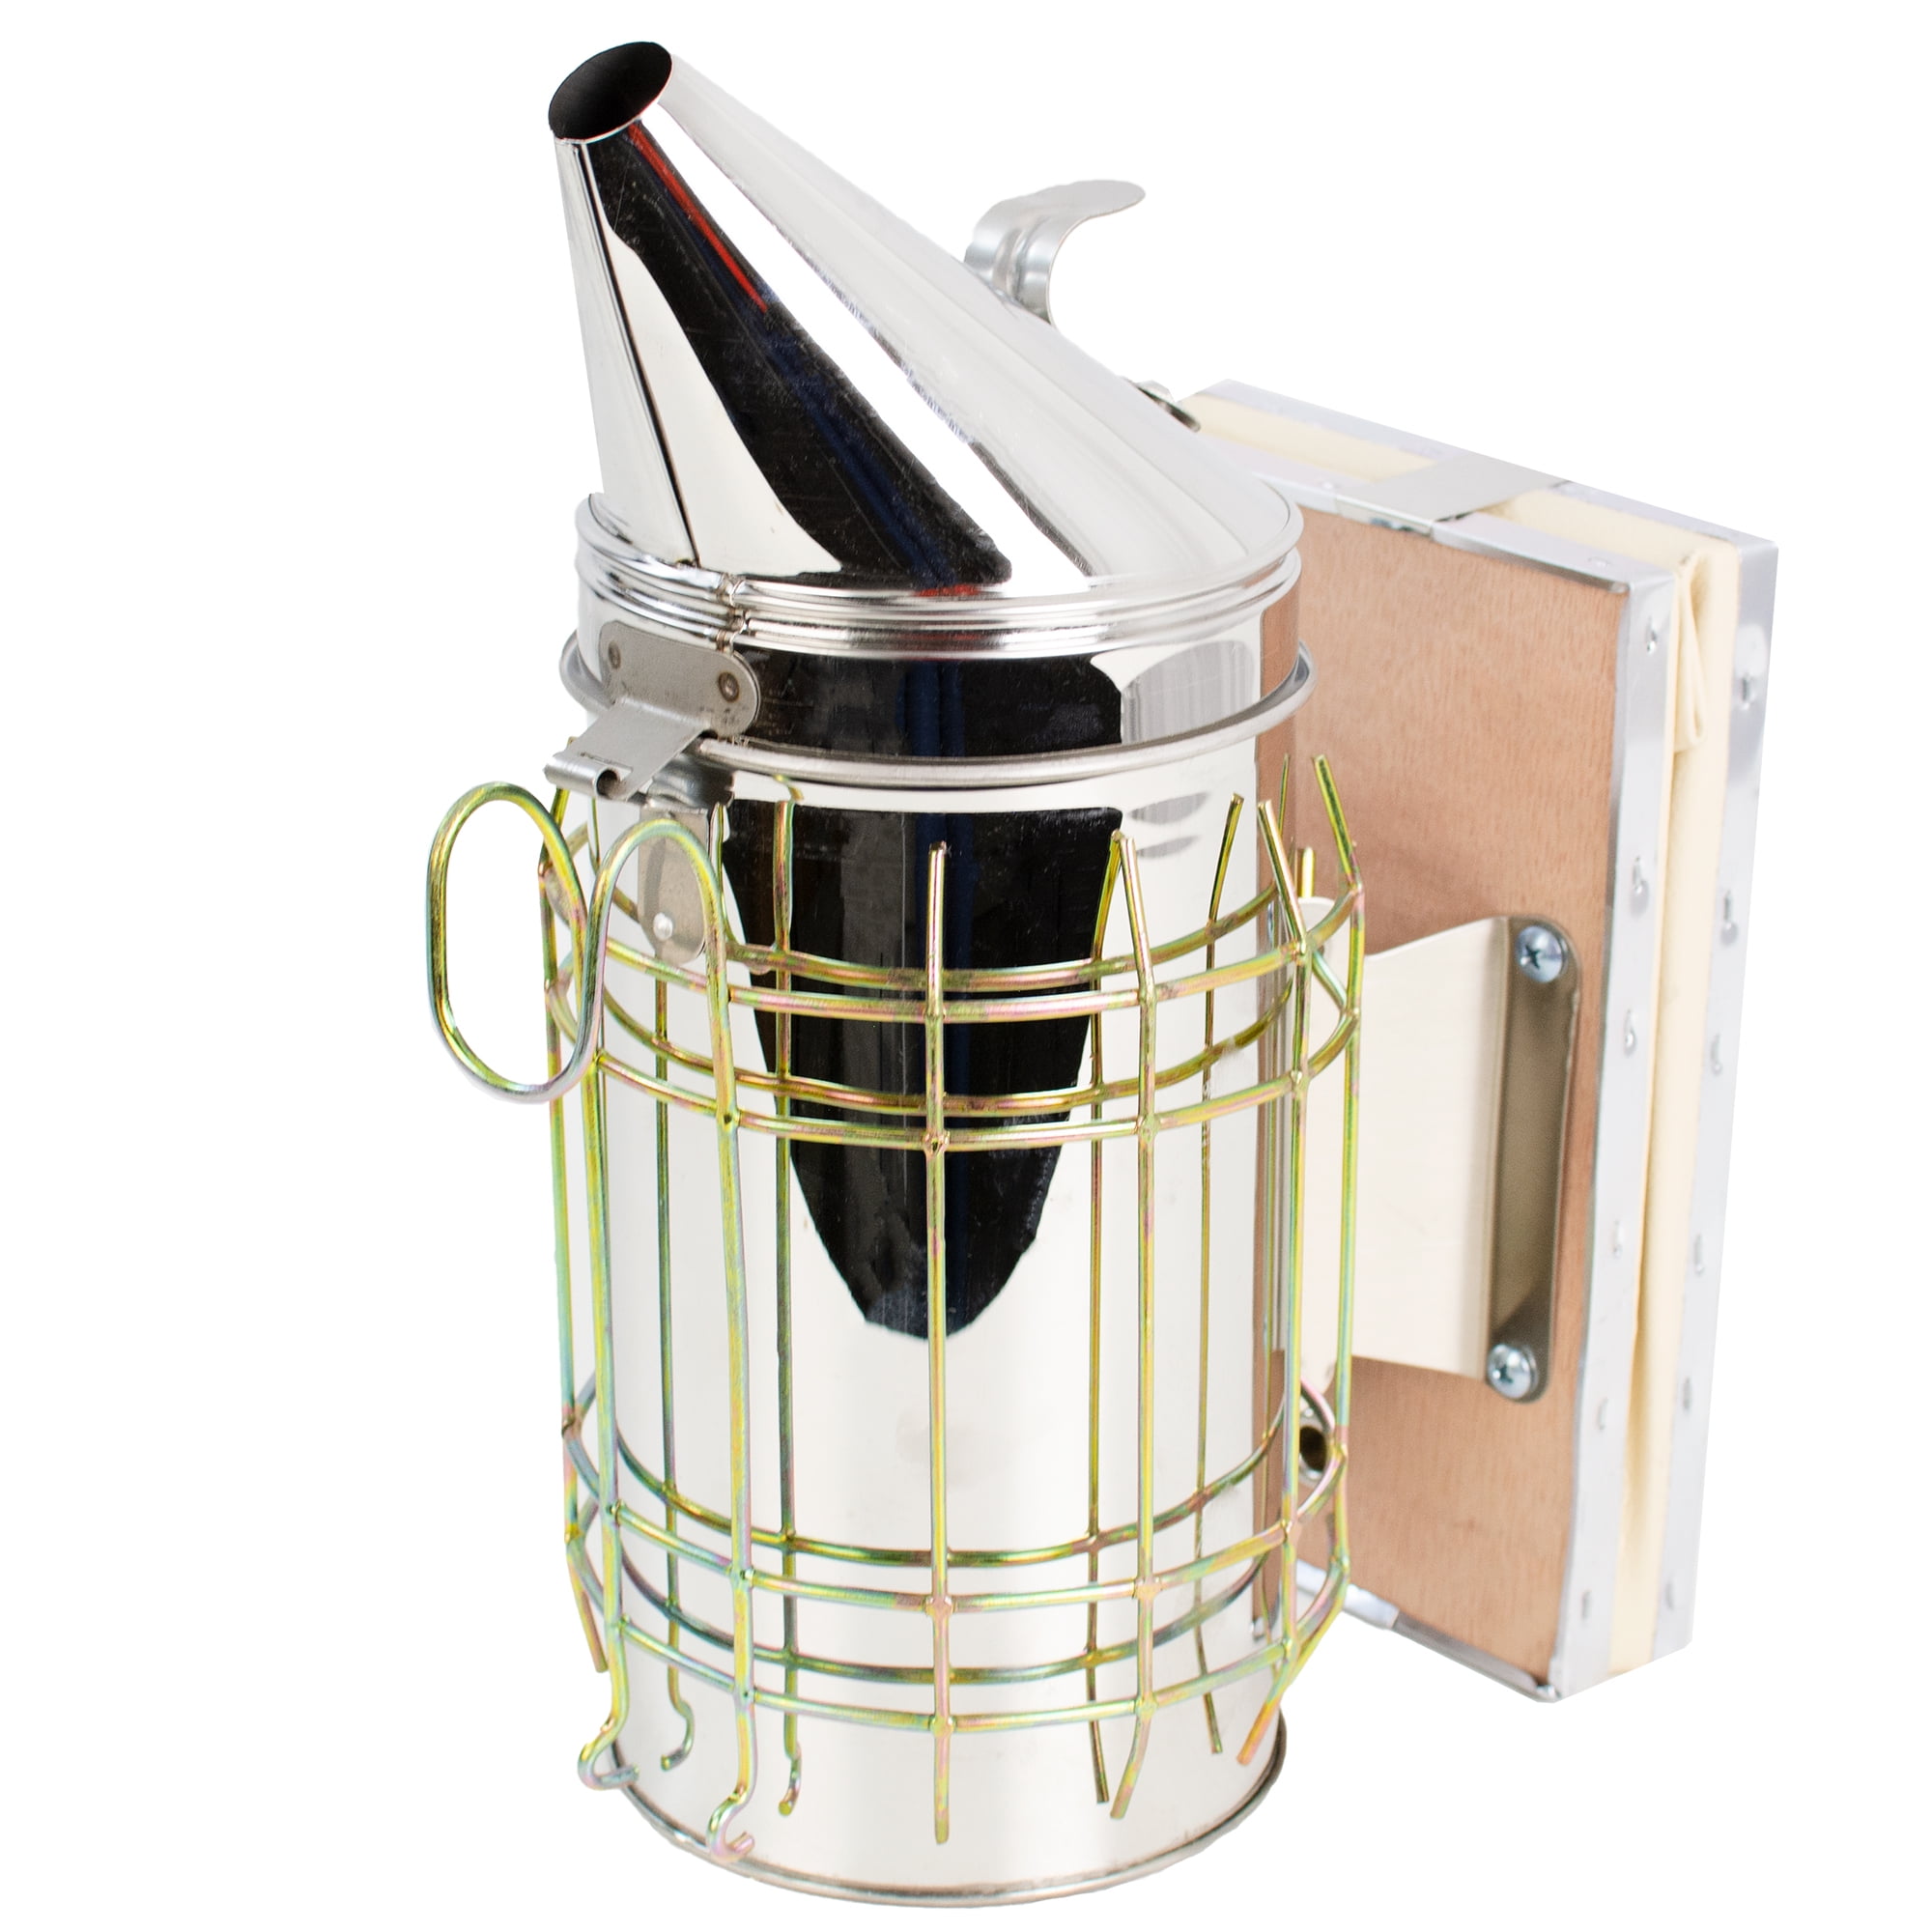 Bee Hive Smoker Heat Shield Calming Beekeeping Equipment Tool Silver Safty Tools 